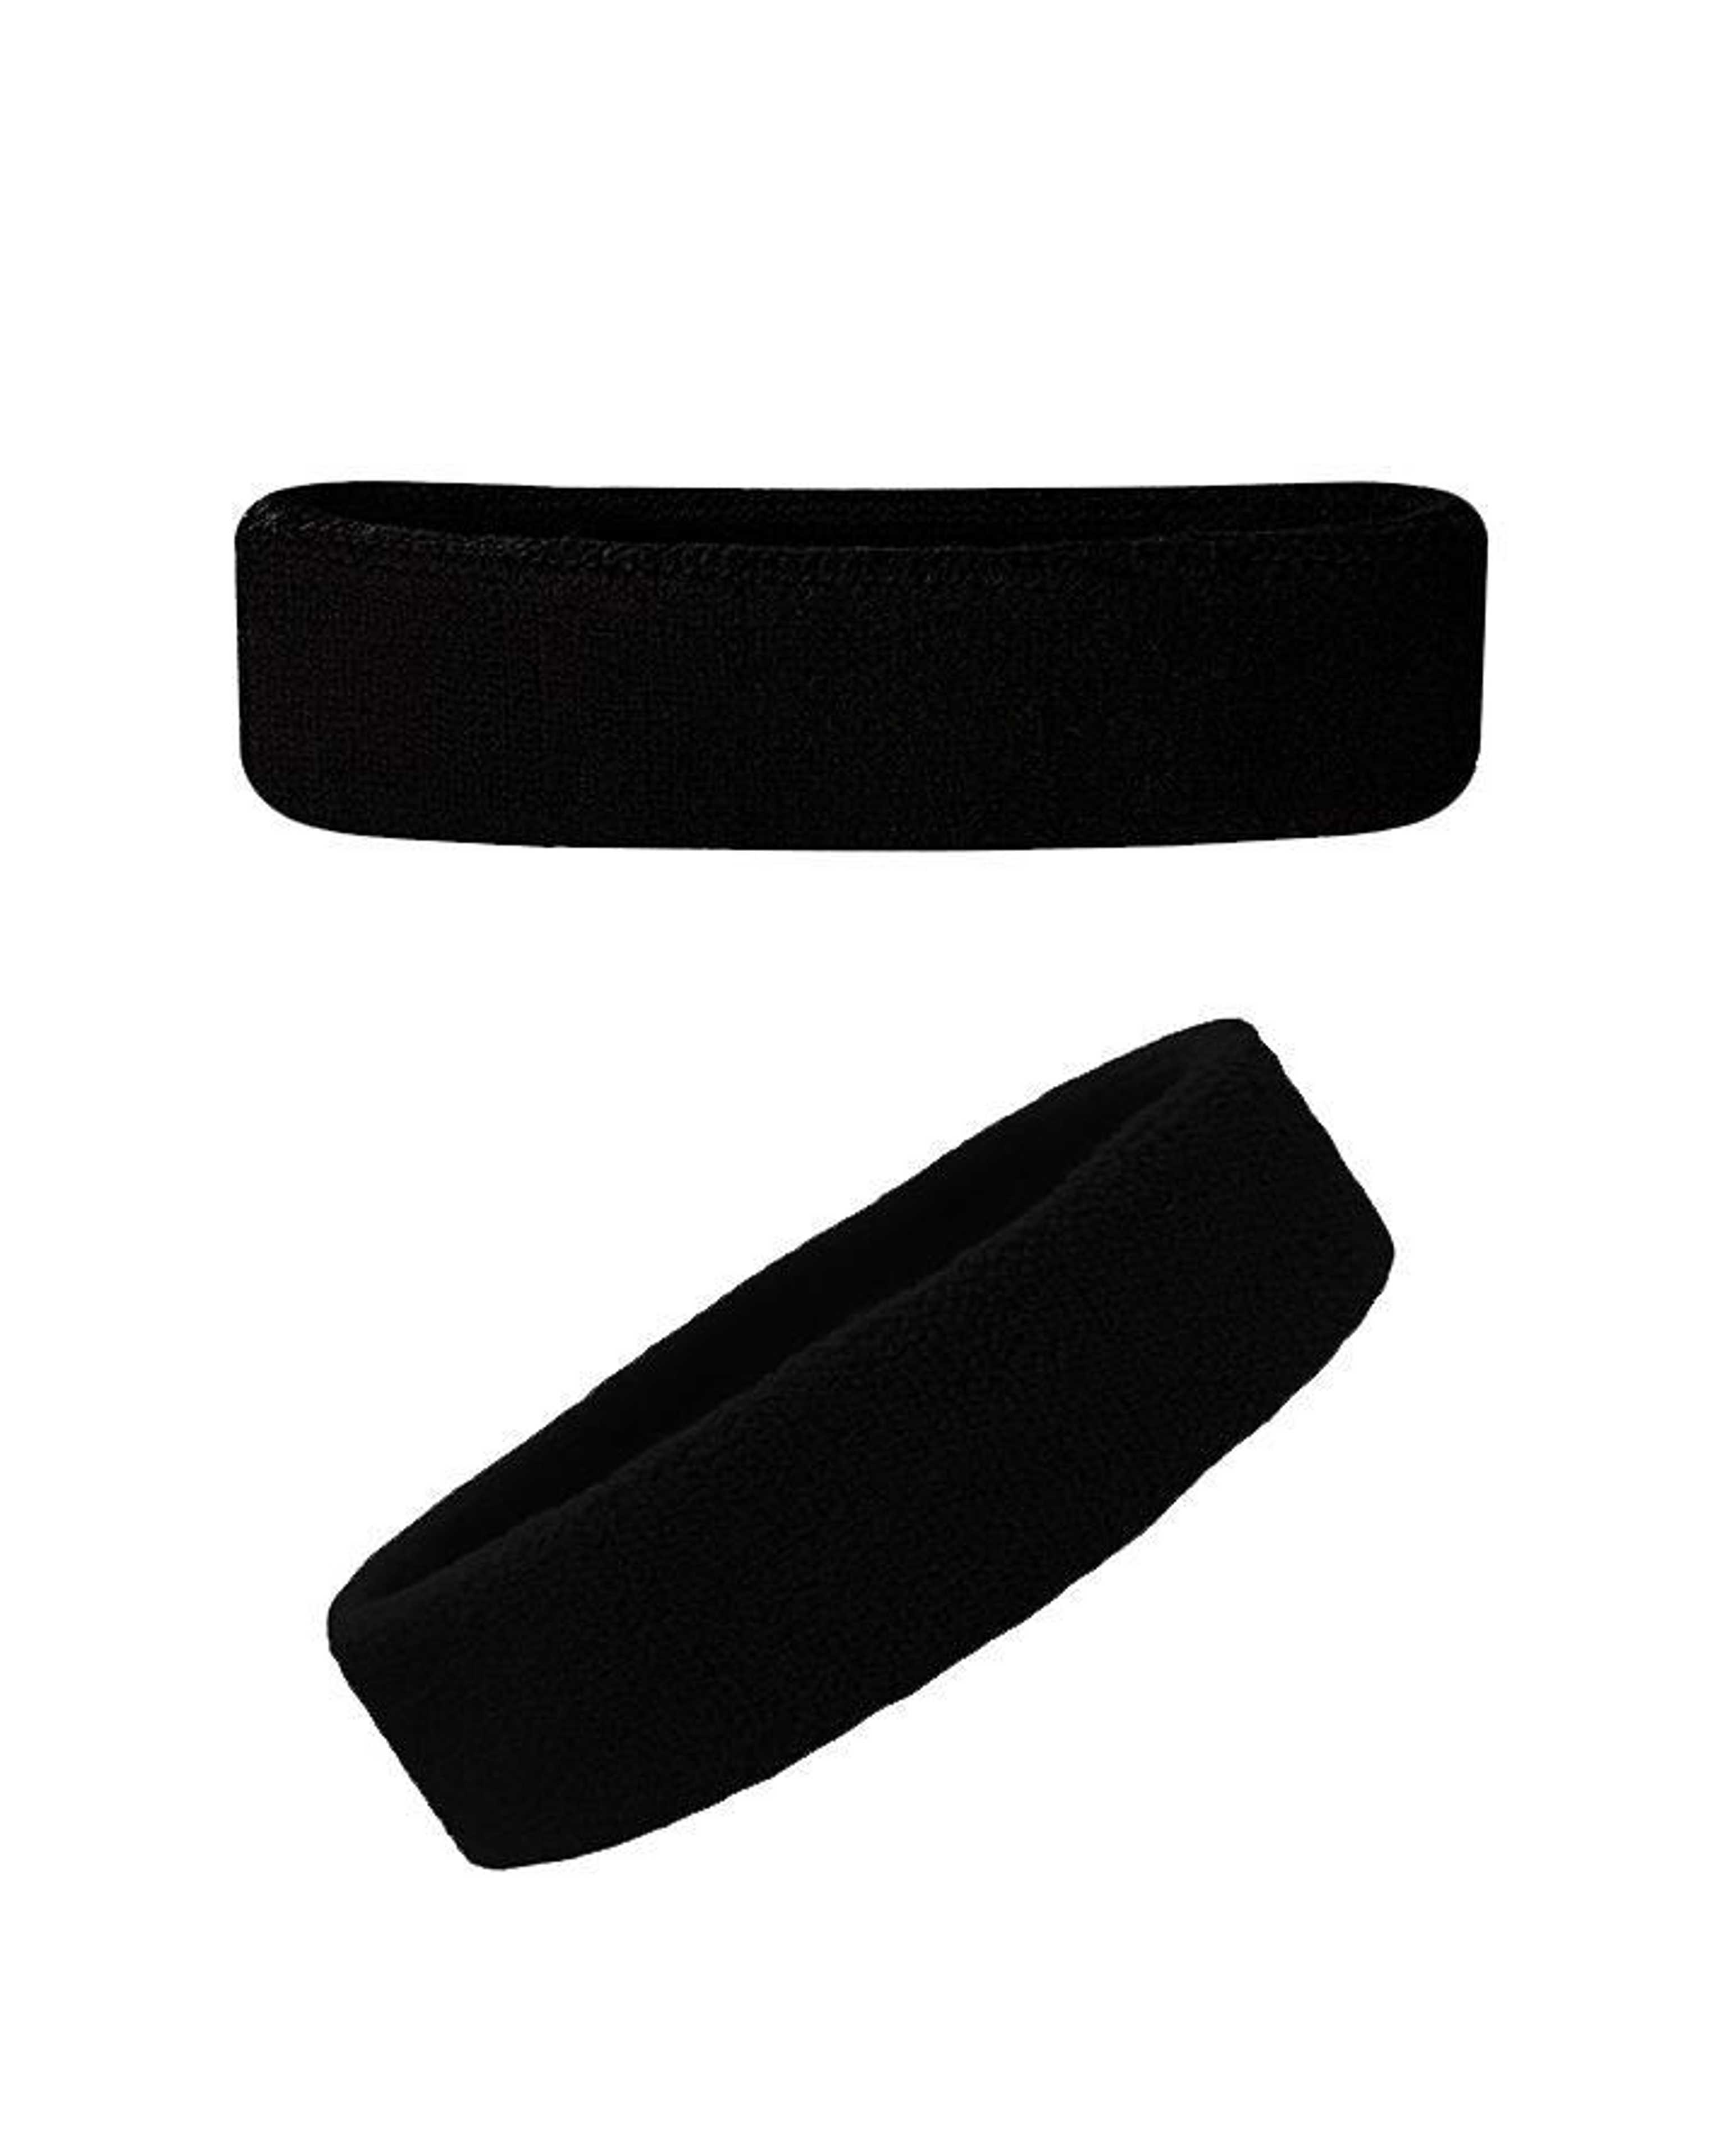 Beautiful  looking Headbands Unisex Athletic Head Gear - Black Pack of 2